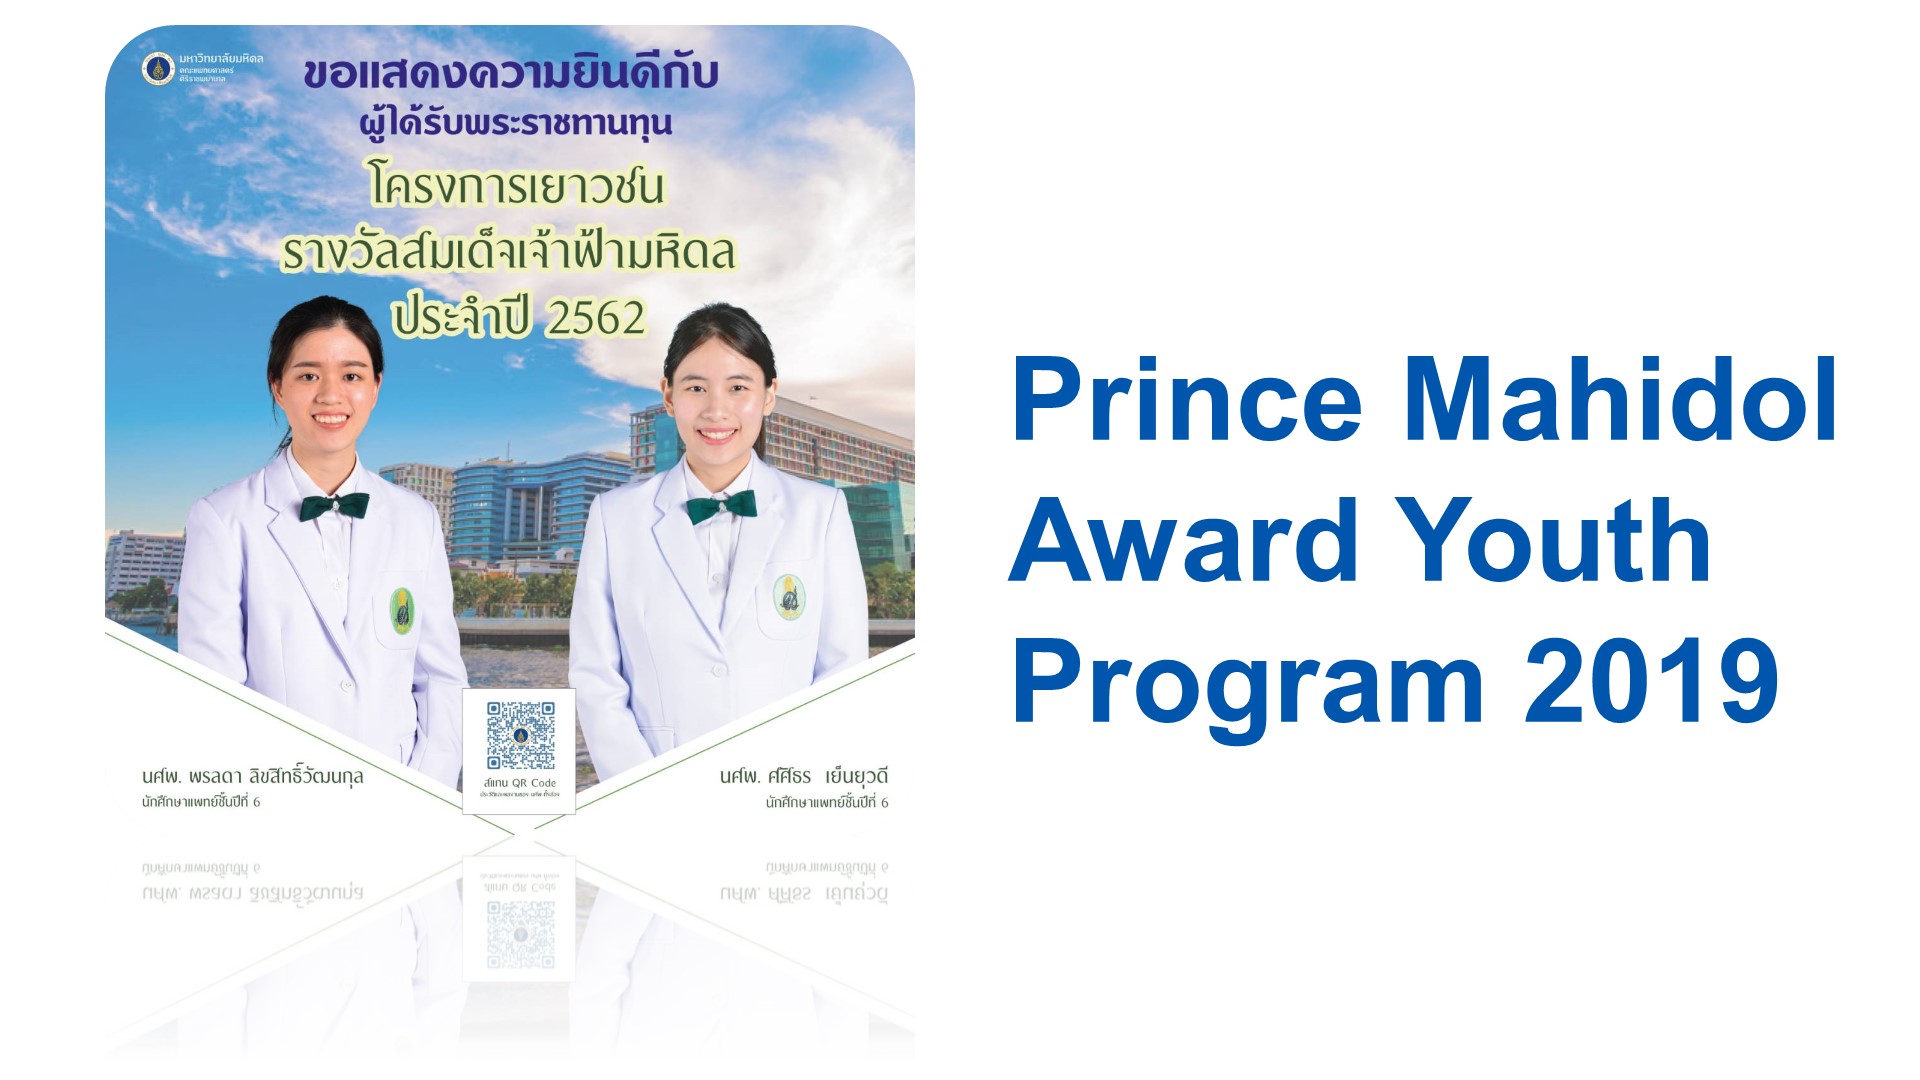 The Result of Prince Mahidol Award Youth Program